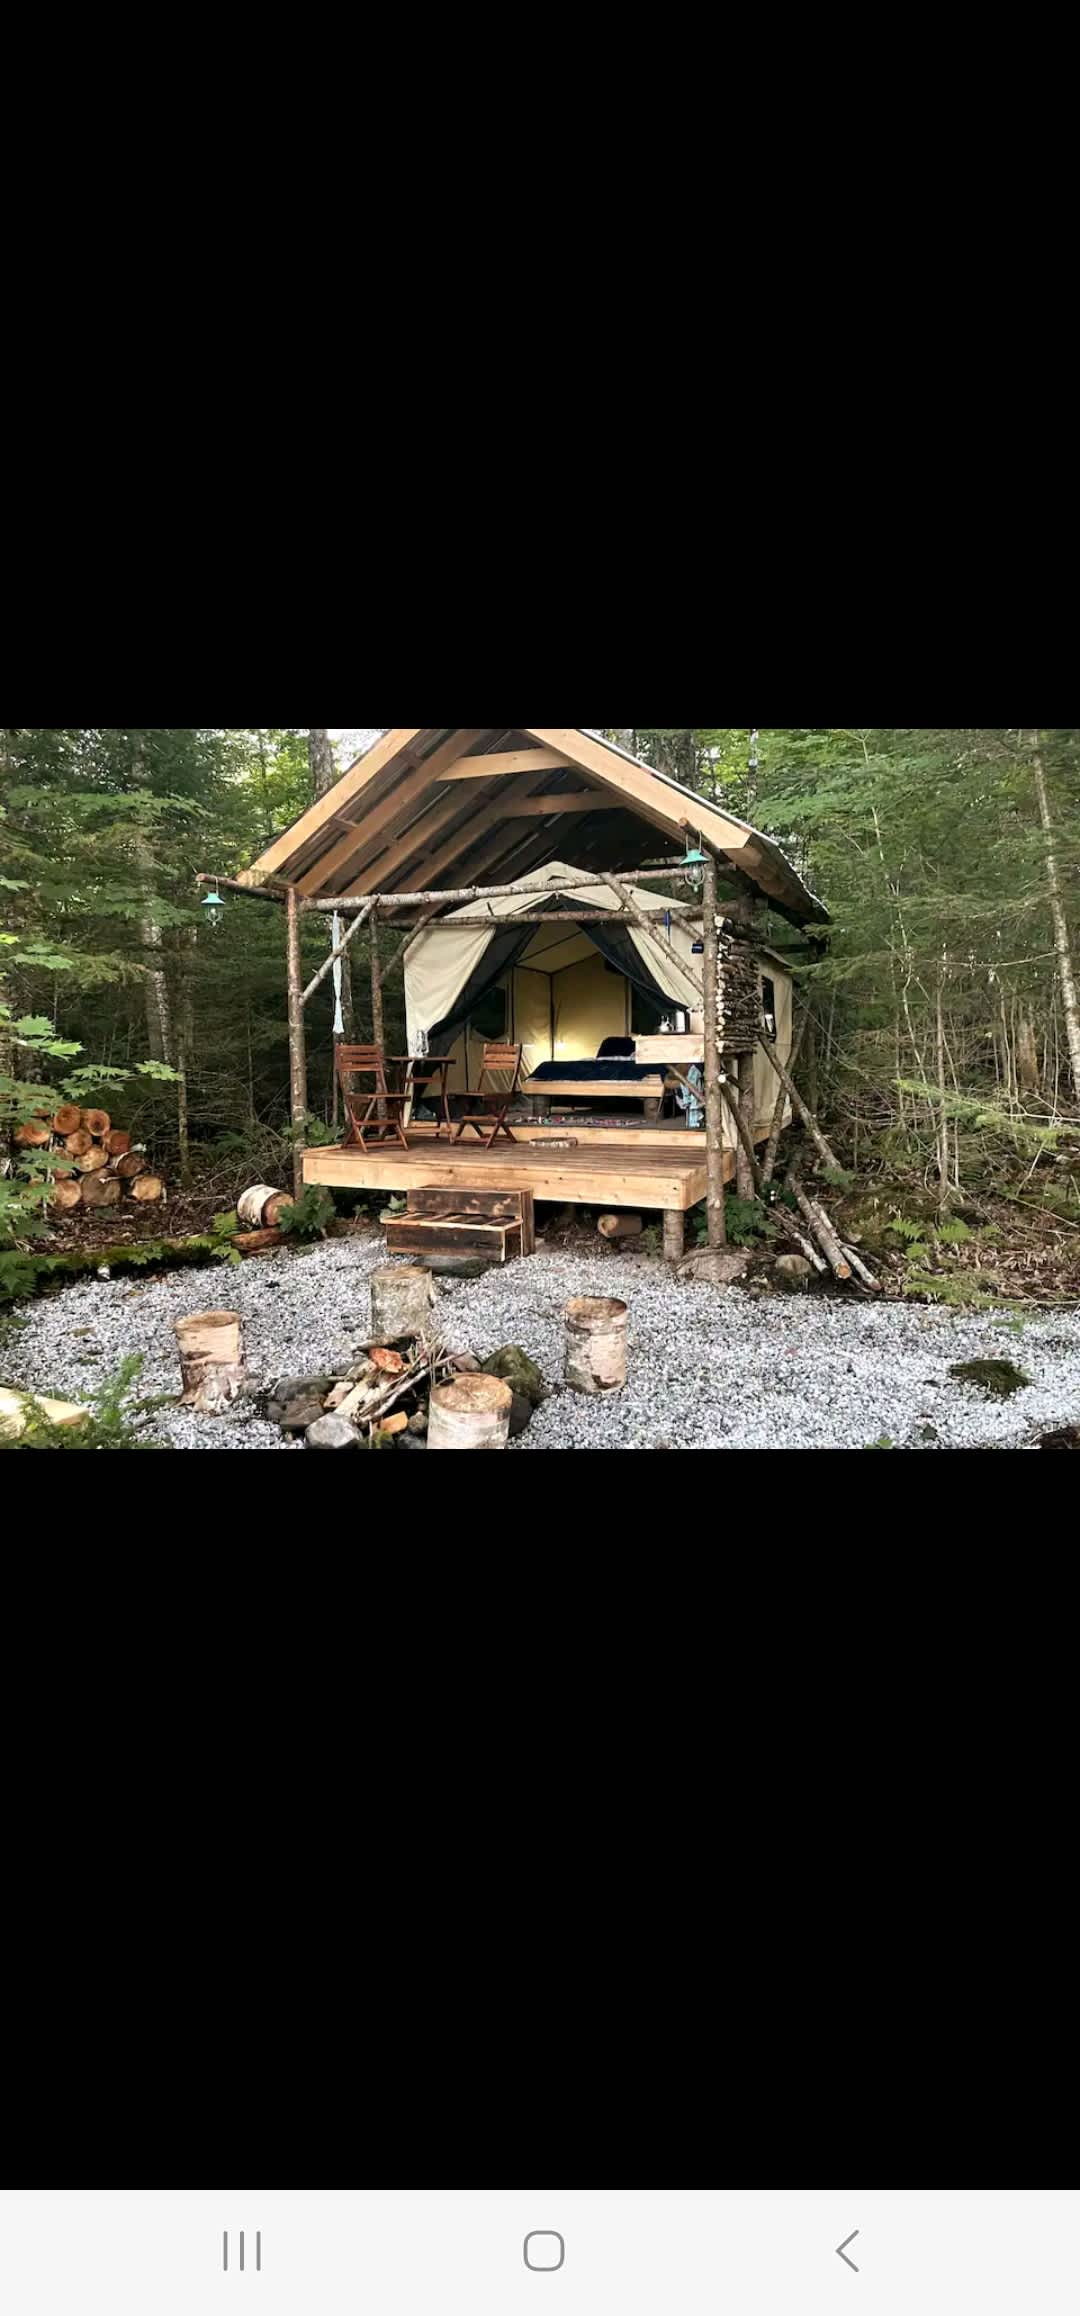 The Birch Tent